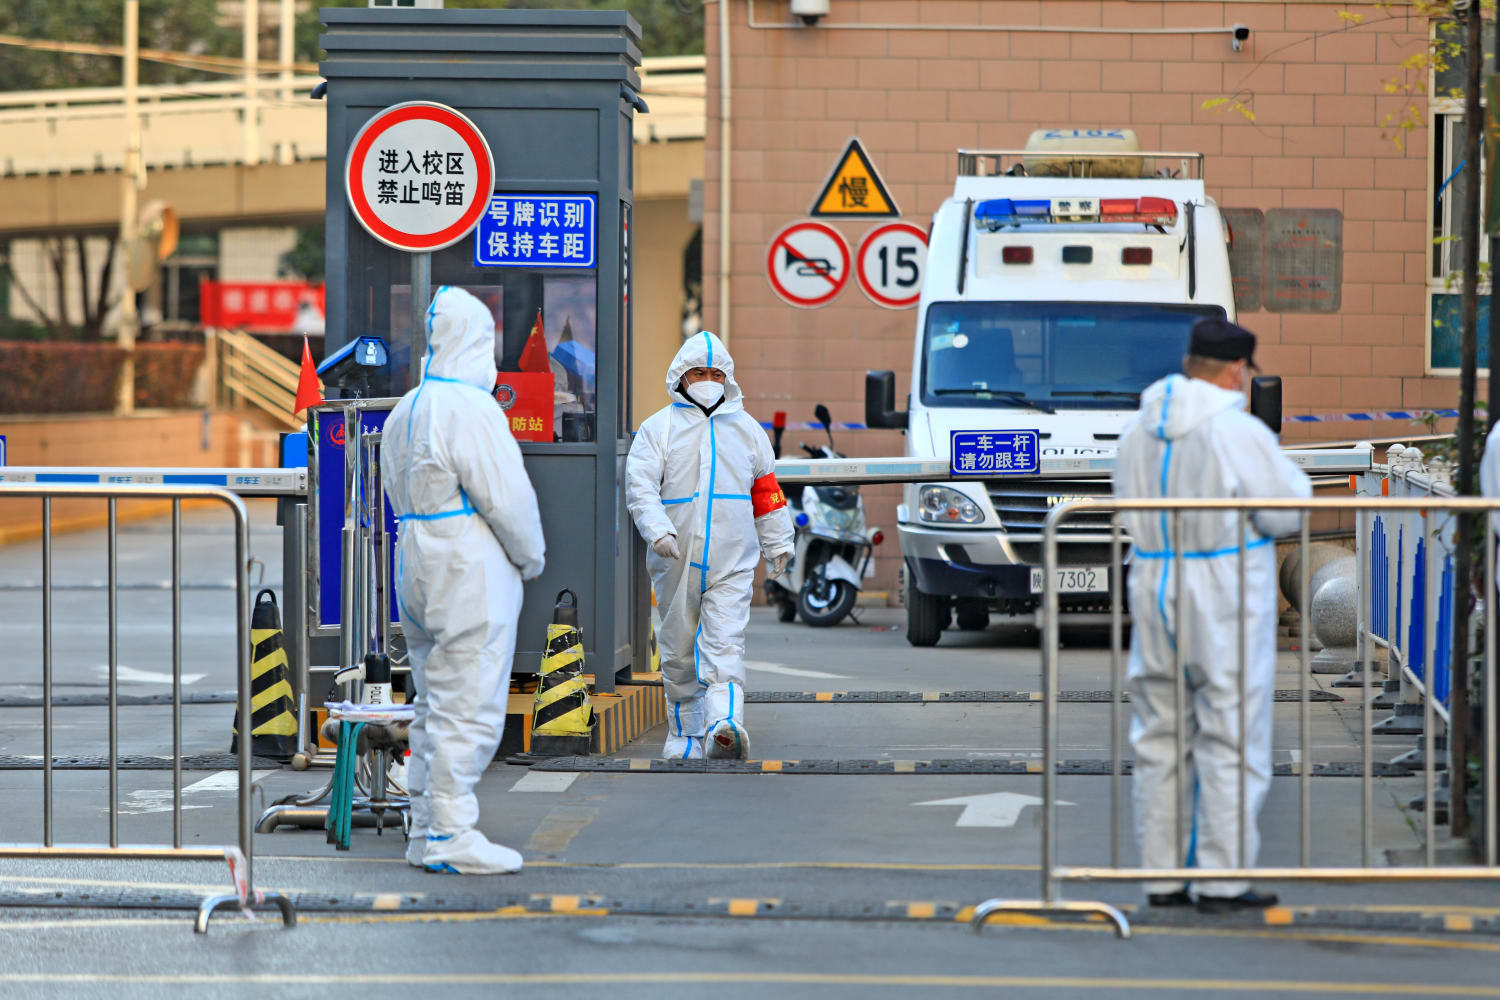 Major Chinese city goes on lockdown over virus outbreak as Olympics near